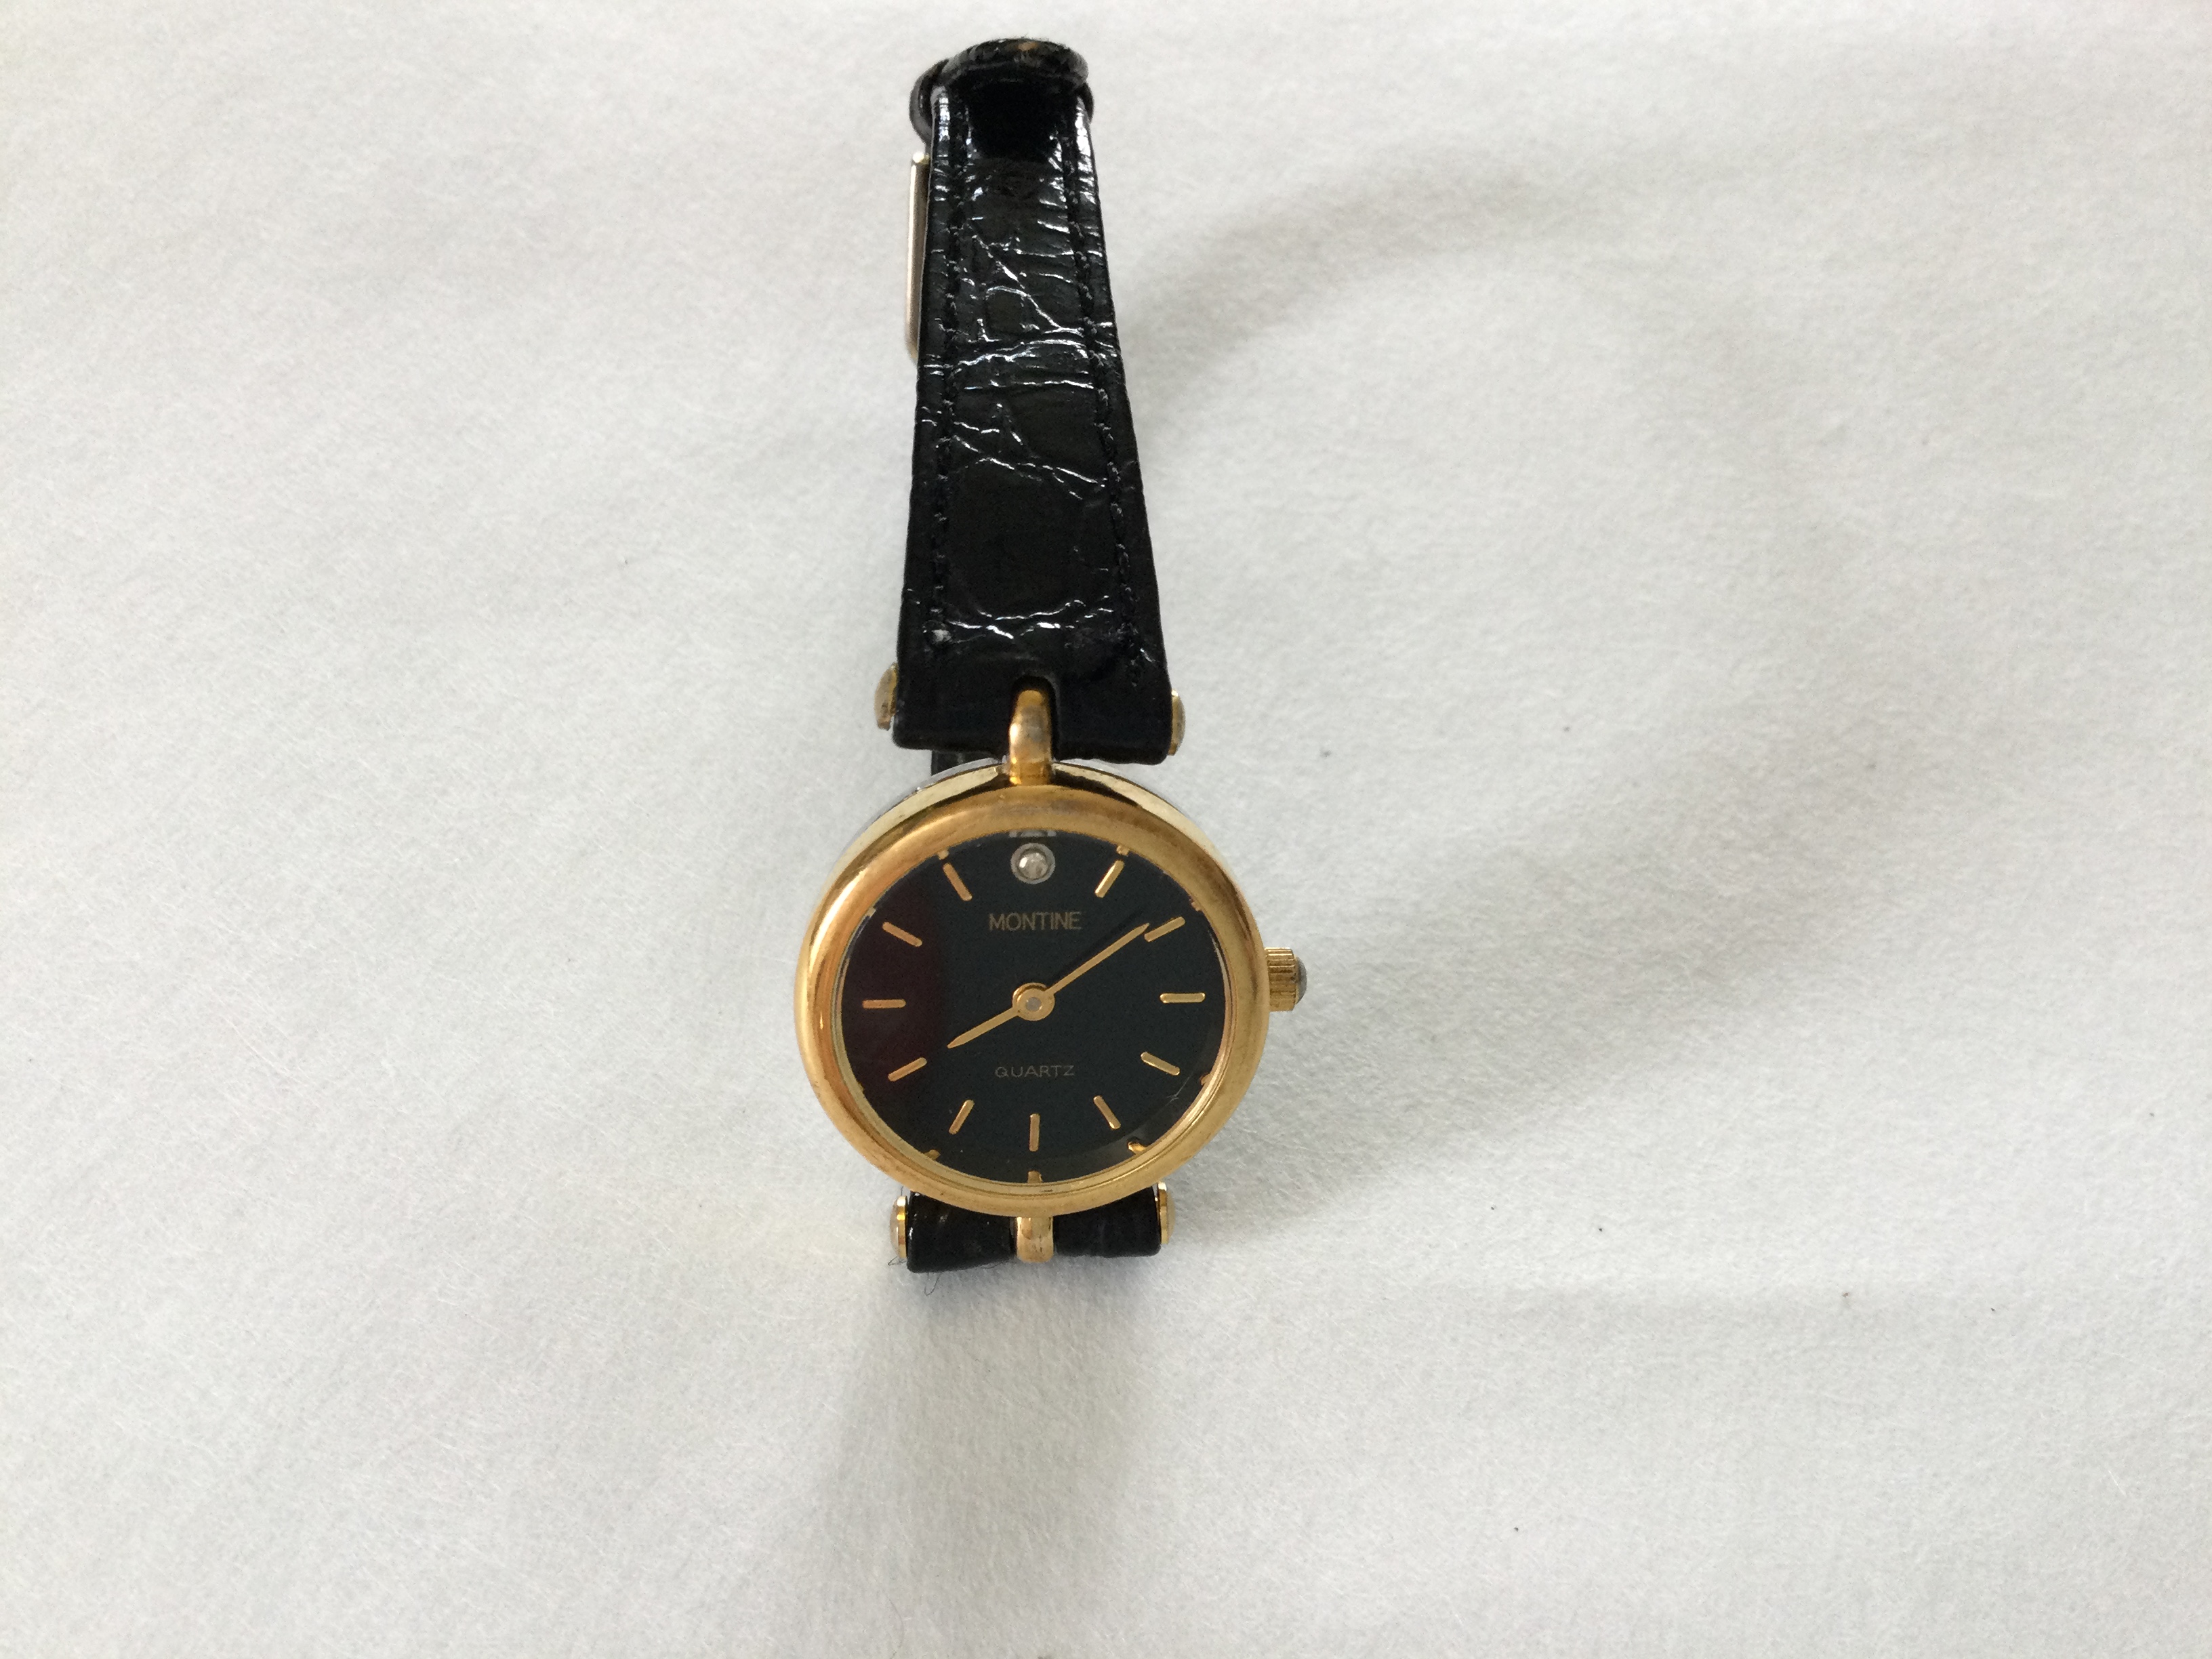 Superb Ladies Montine Quartz Wristwatch (GS8) A superb Montine Ladies Quartz wristwatch - Image 5 of 5